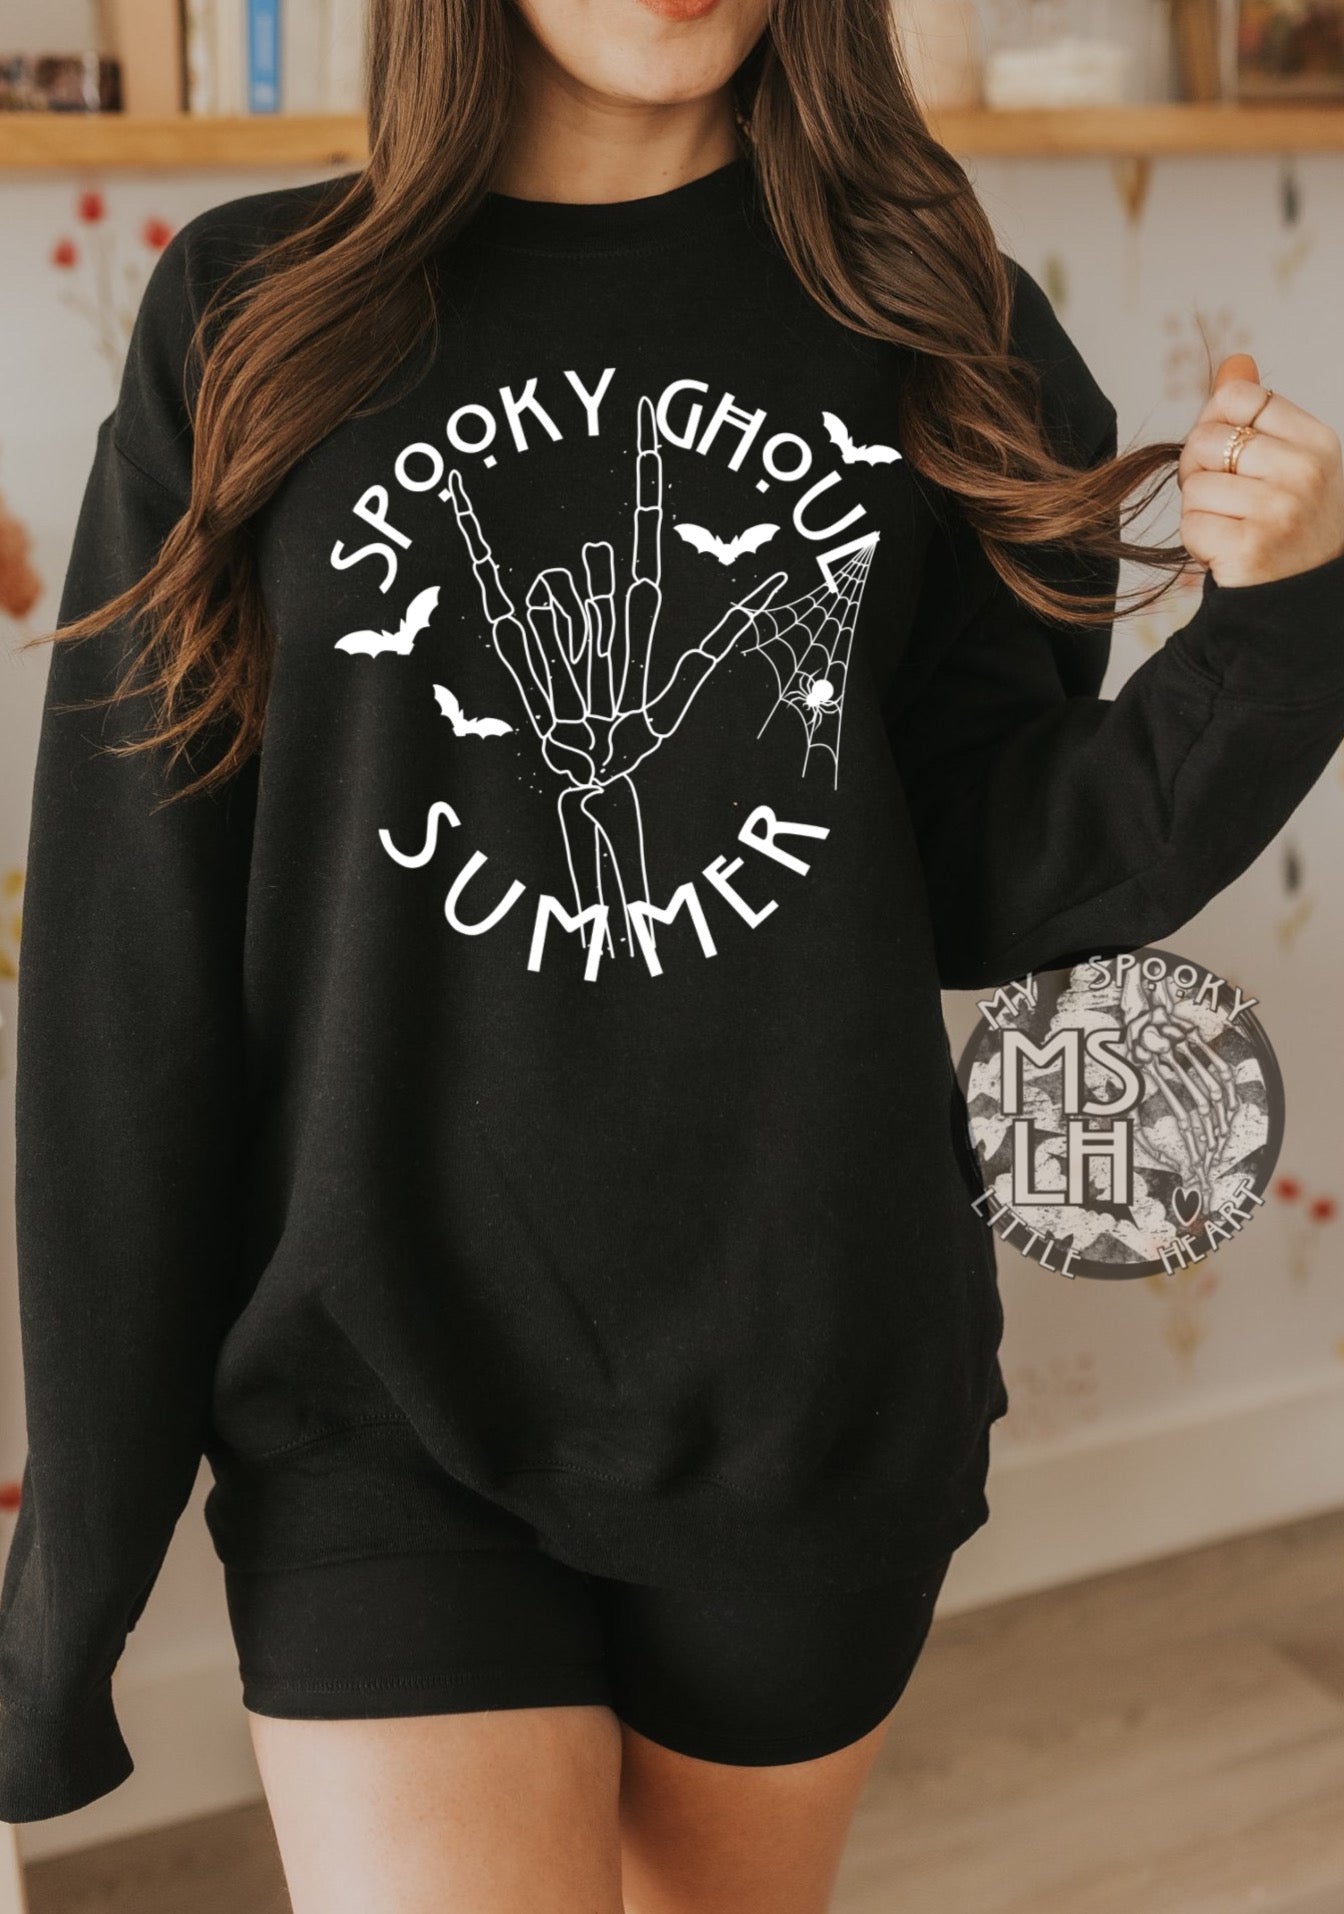 Spooky Ghoul Summer MSLH